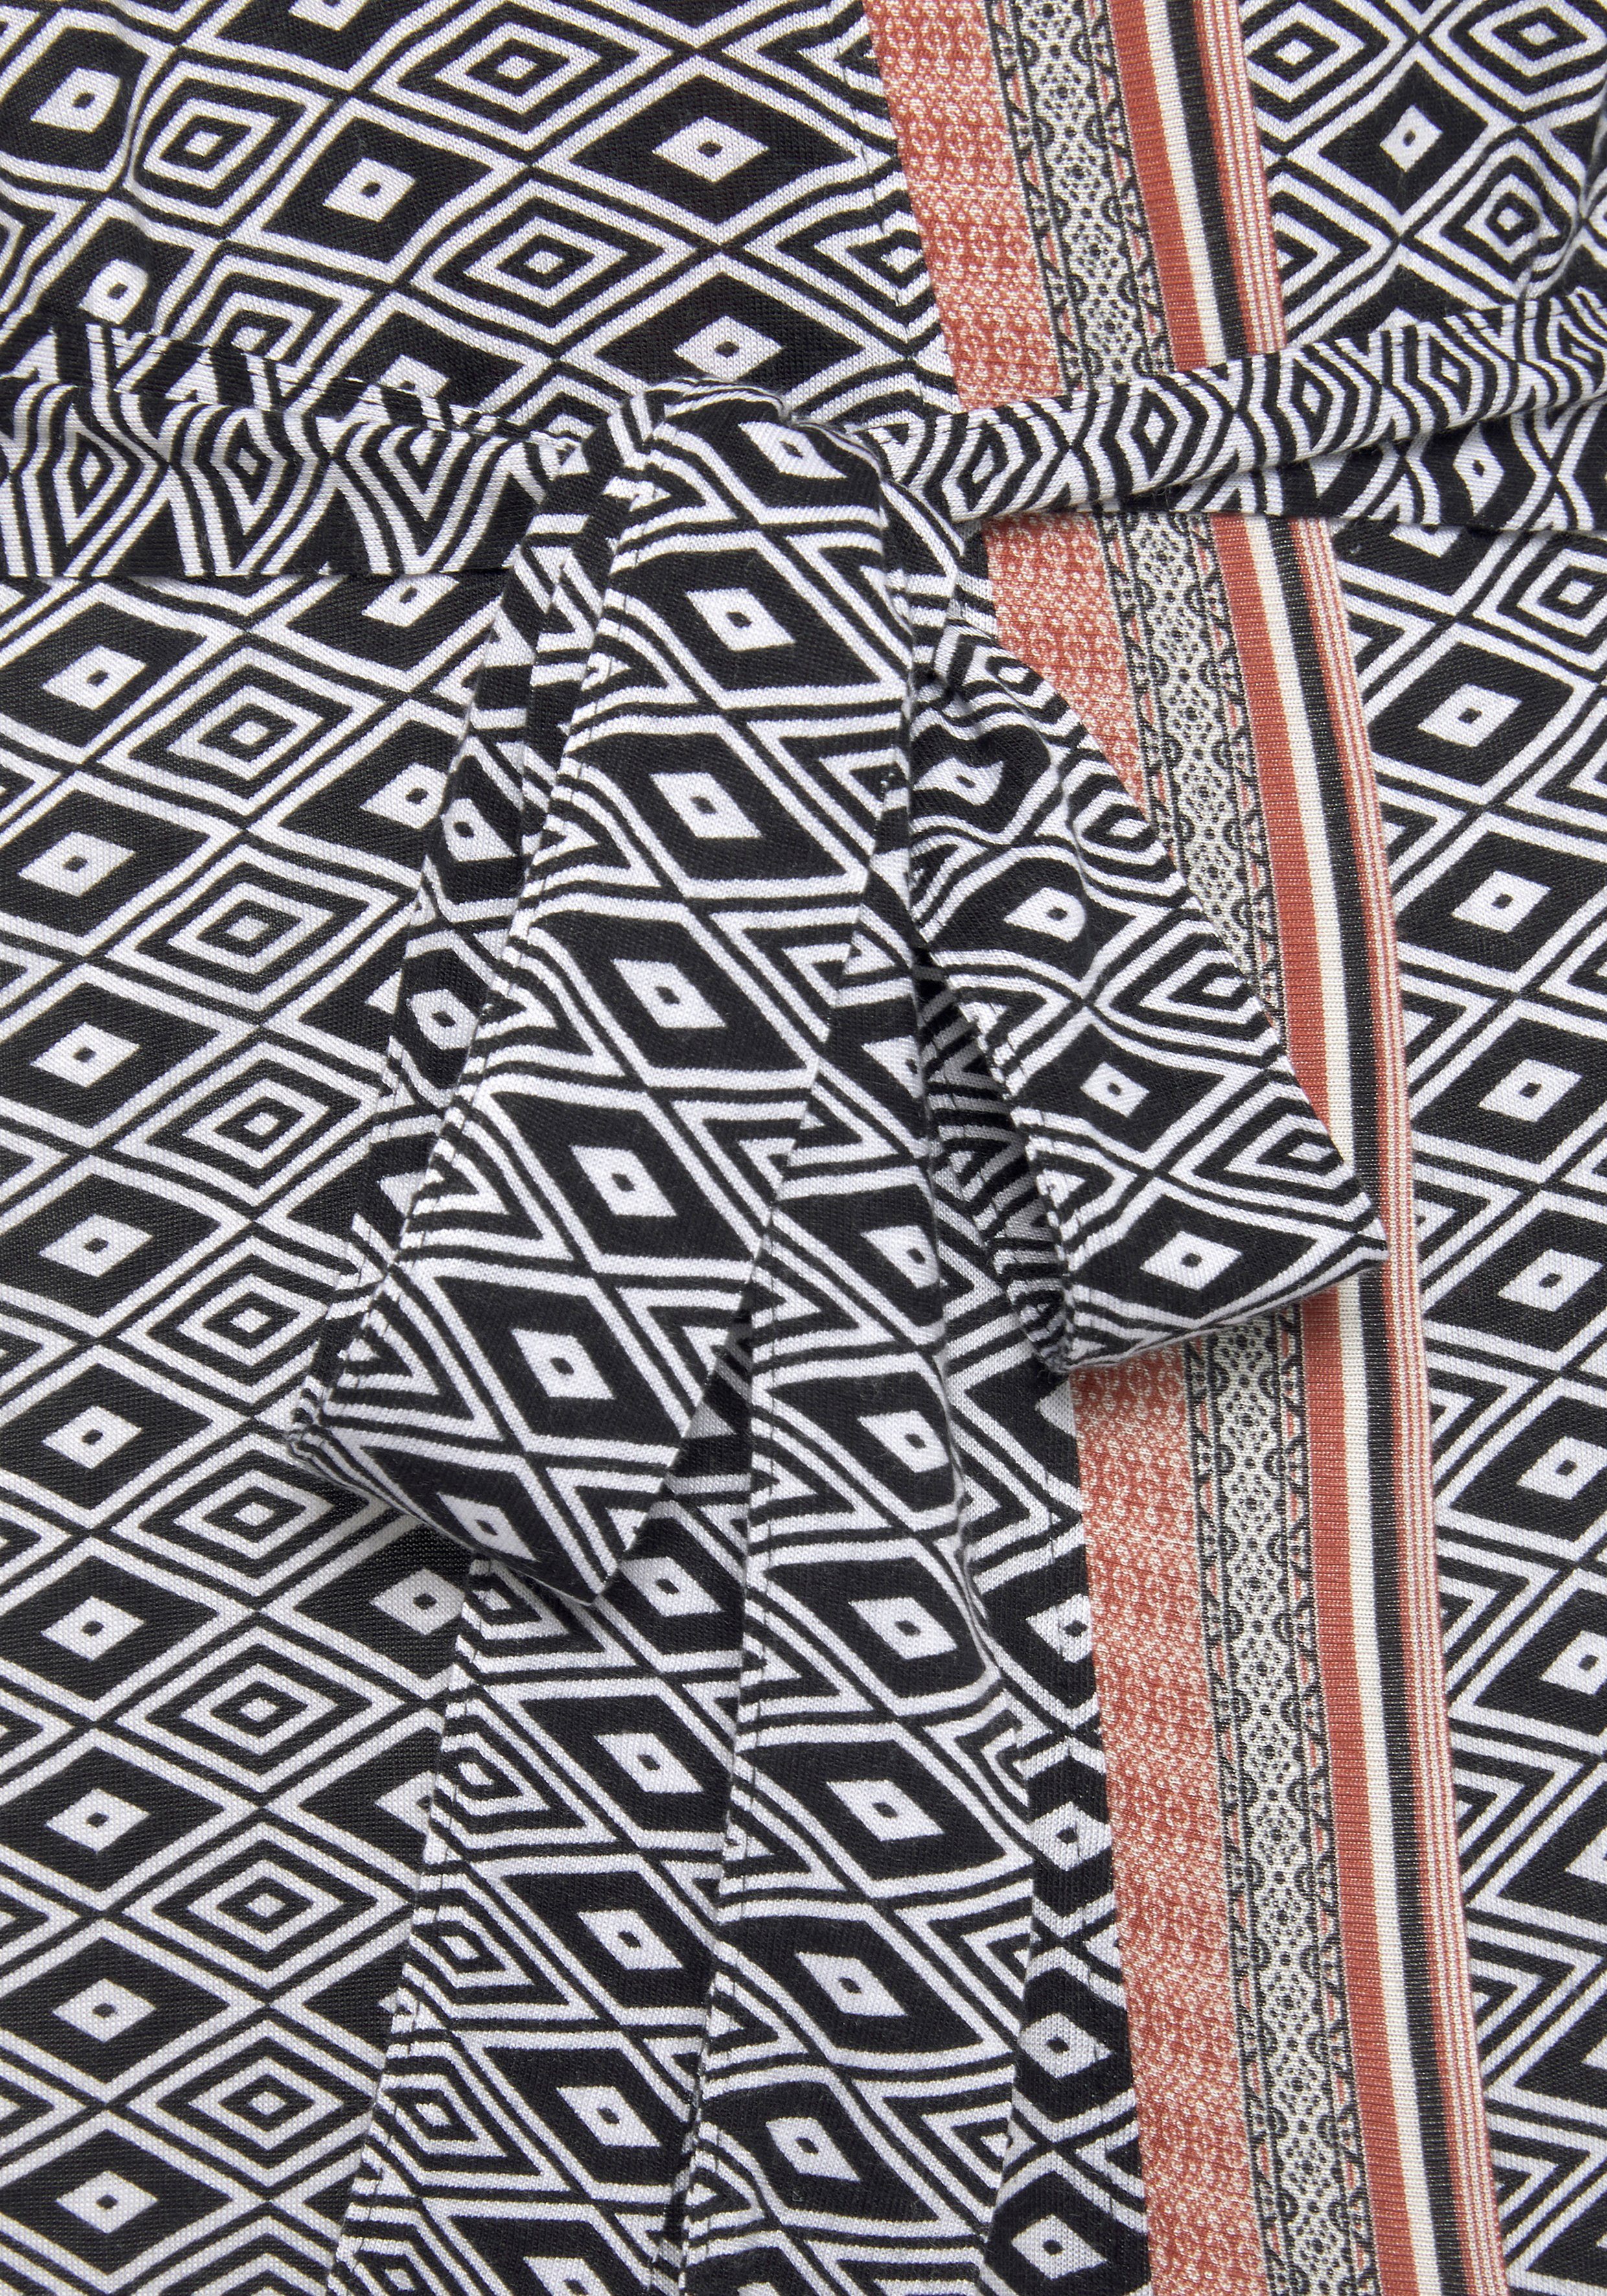 Vivance Dreams gemustert Gürtel, Ethno-Design braun in Kimono, Kimono-Kragen, schönem Single-Jersey, Kurzform